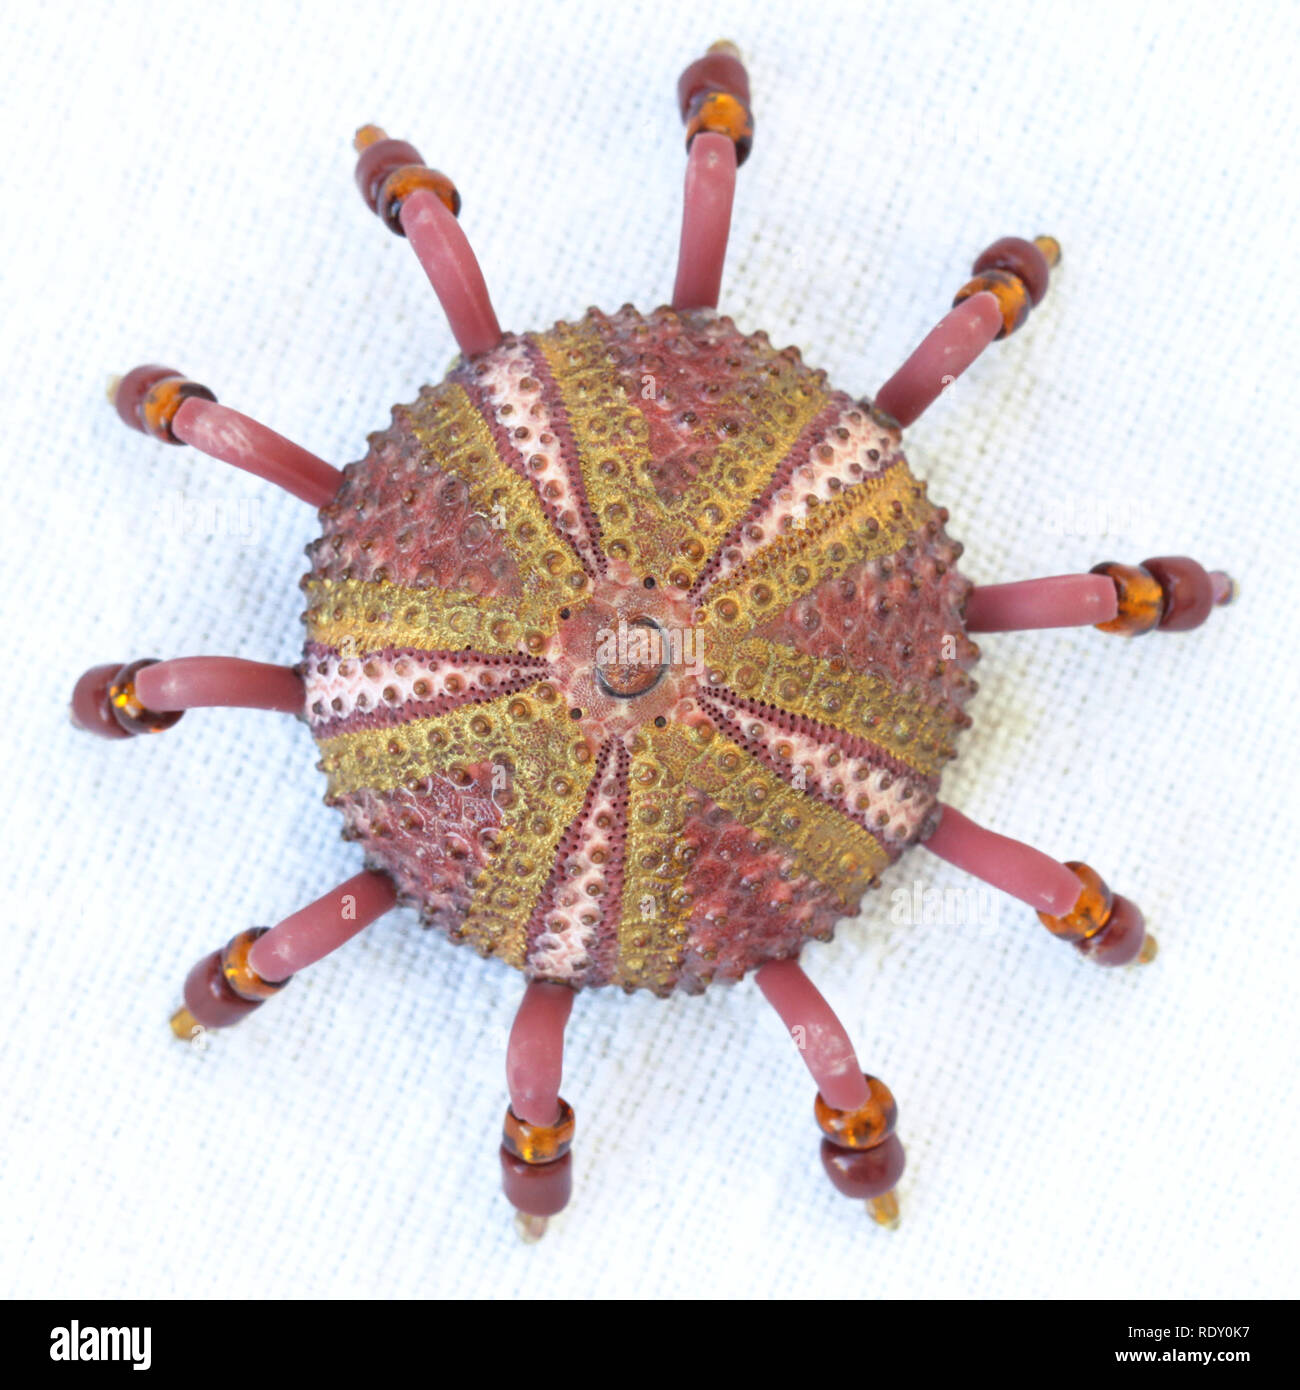 Handmade sea urchin fridge magnets made of natural materials and beads Stock Photo